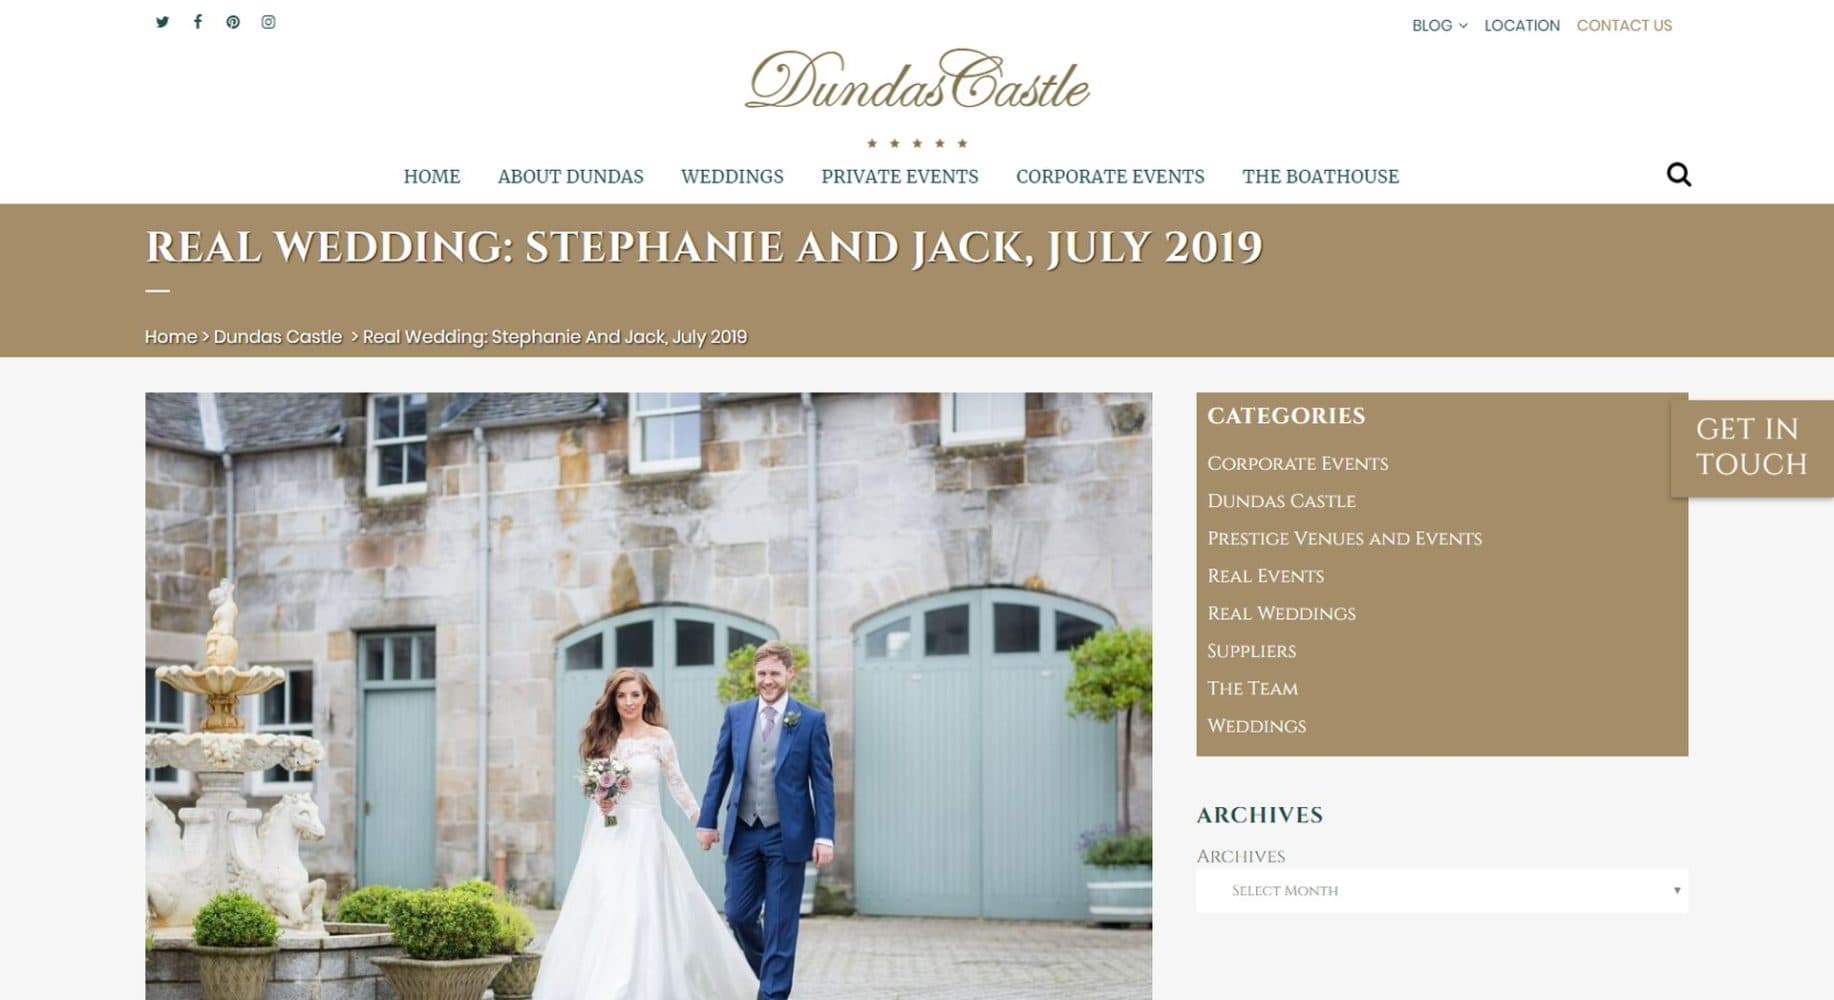 Dundas Castle Website Design Blog